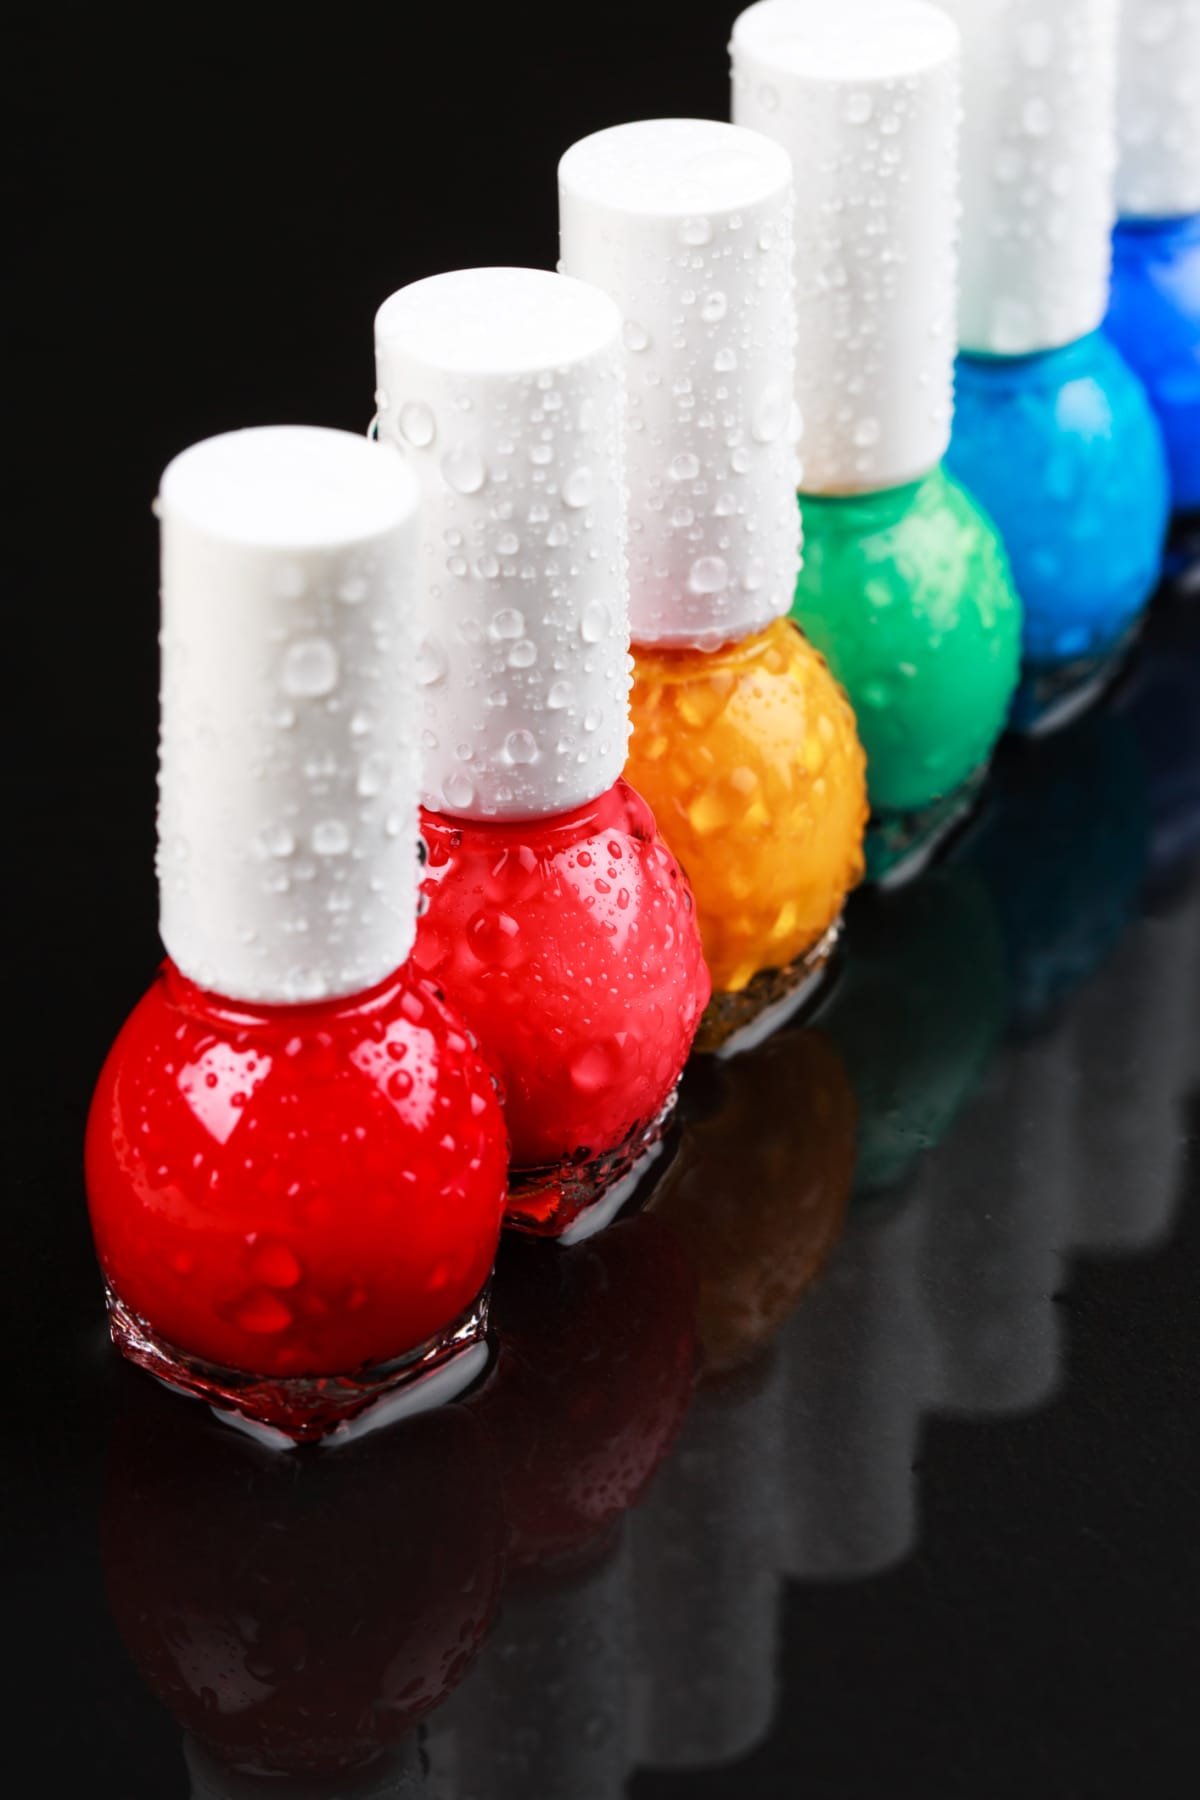 Colorful nail polish bottles lined up